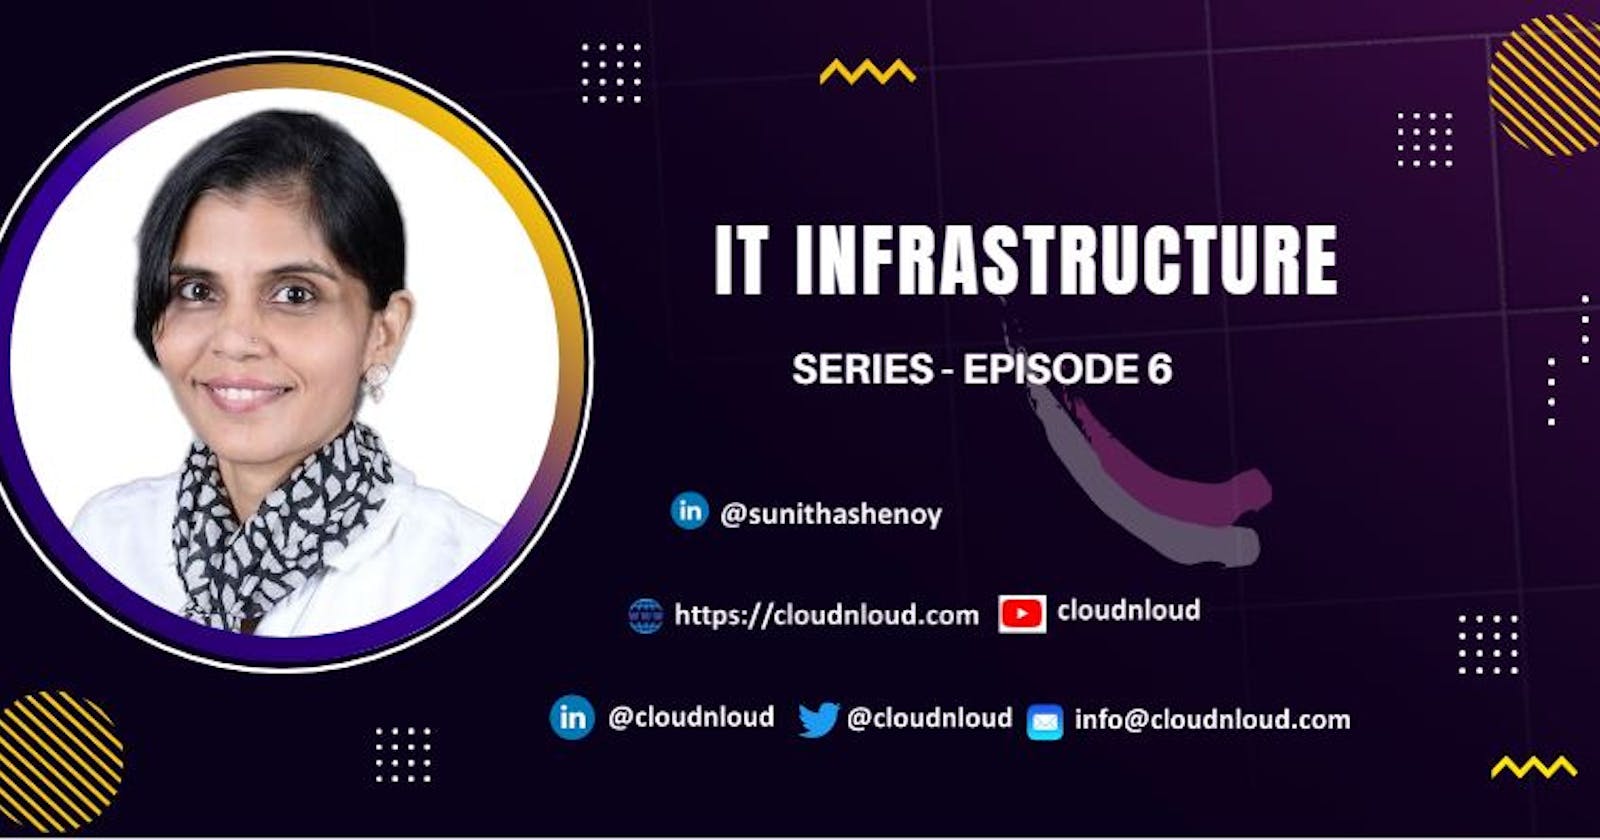 IT Infrastructure series - Episode 6